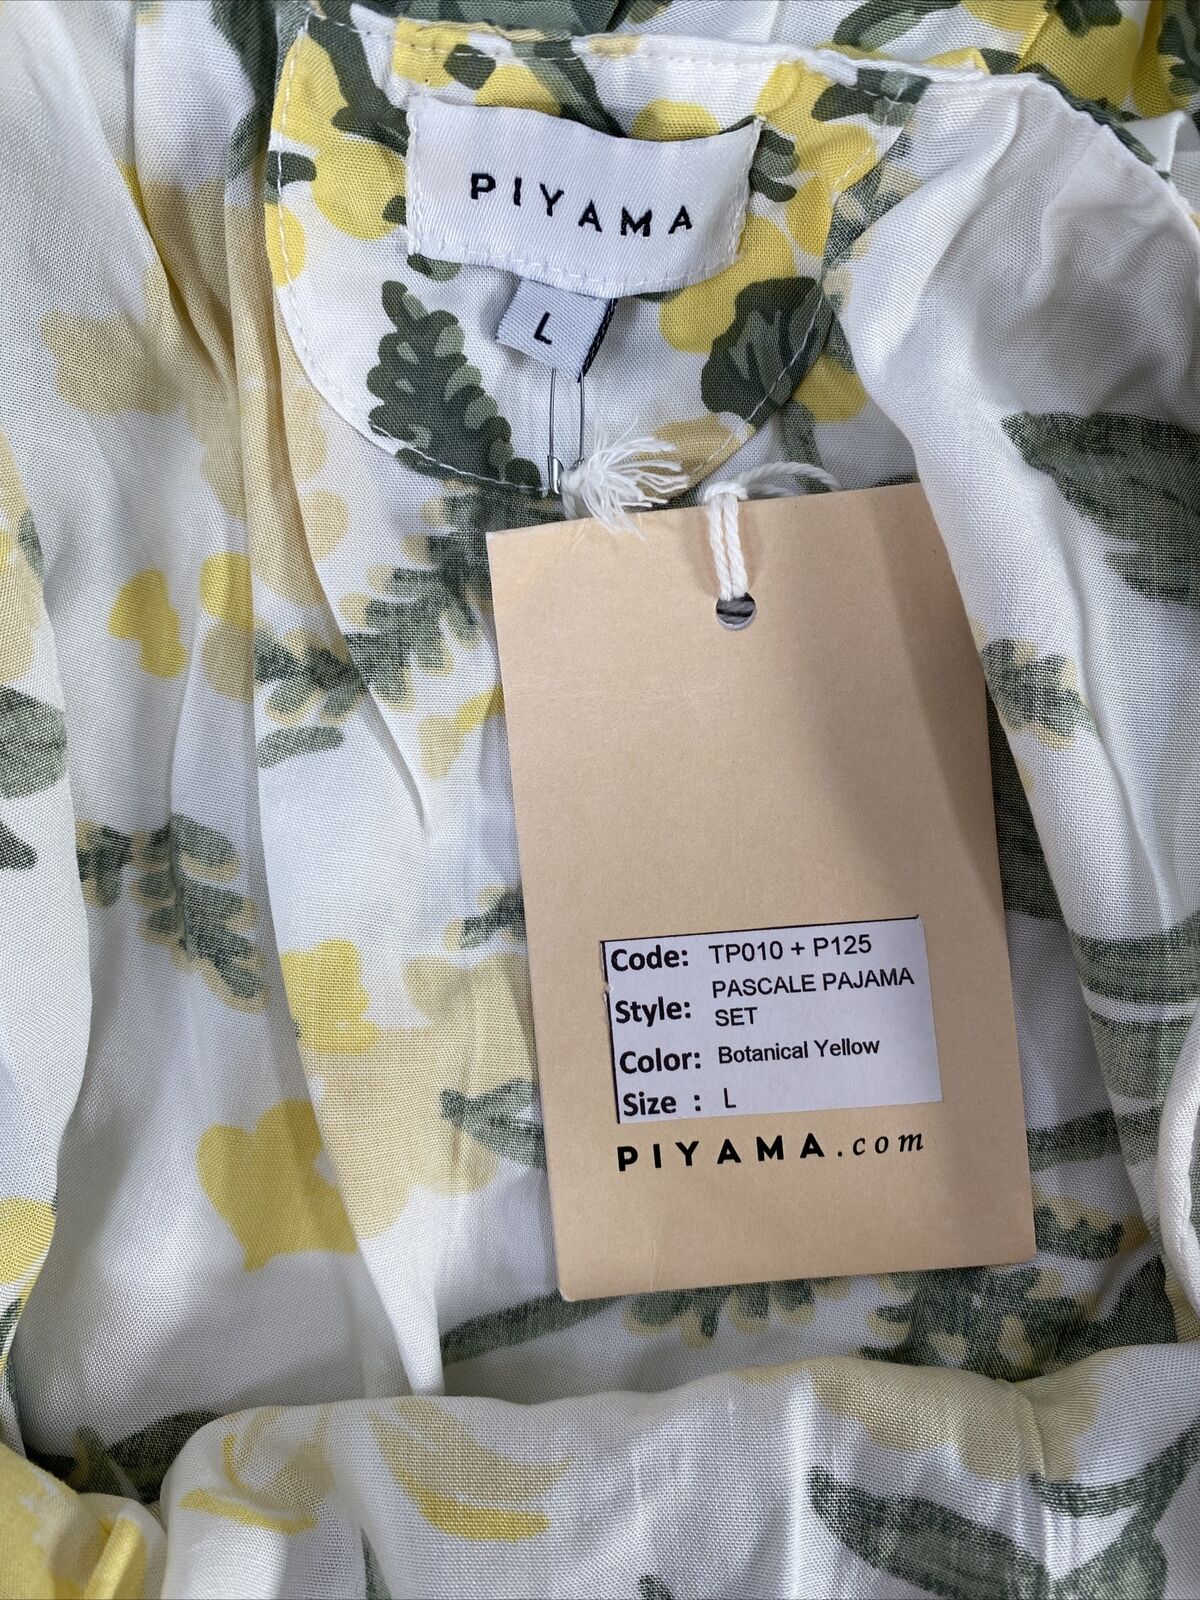 NEW Piyama Women's White & Yellow Floral Pascale Pajama Top Shirt - L